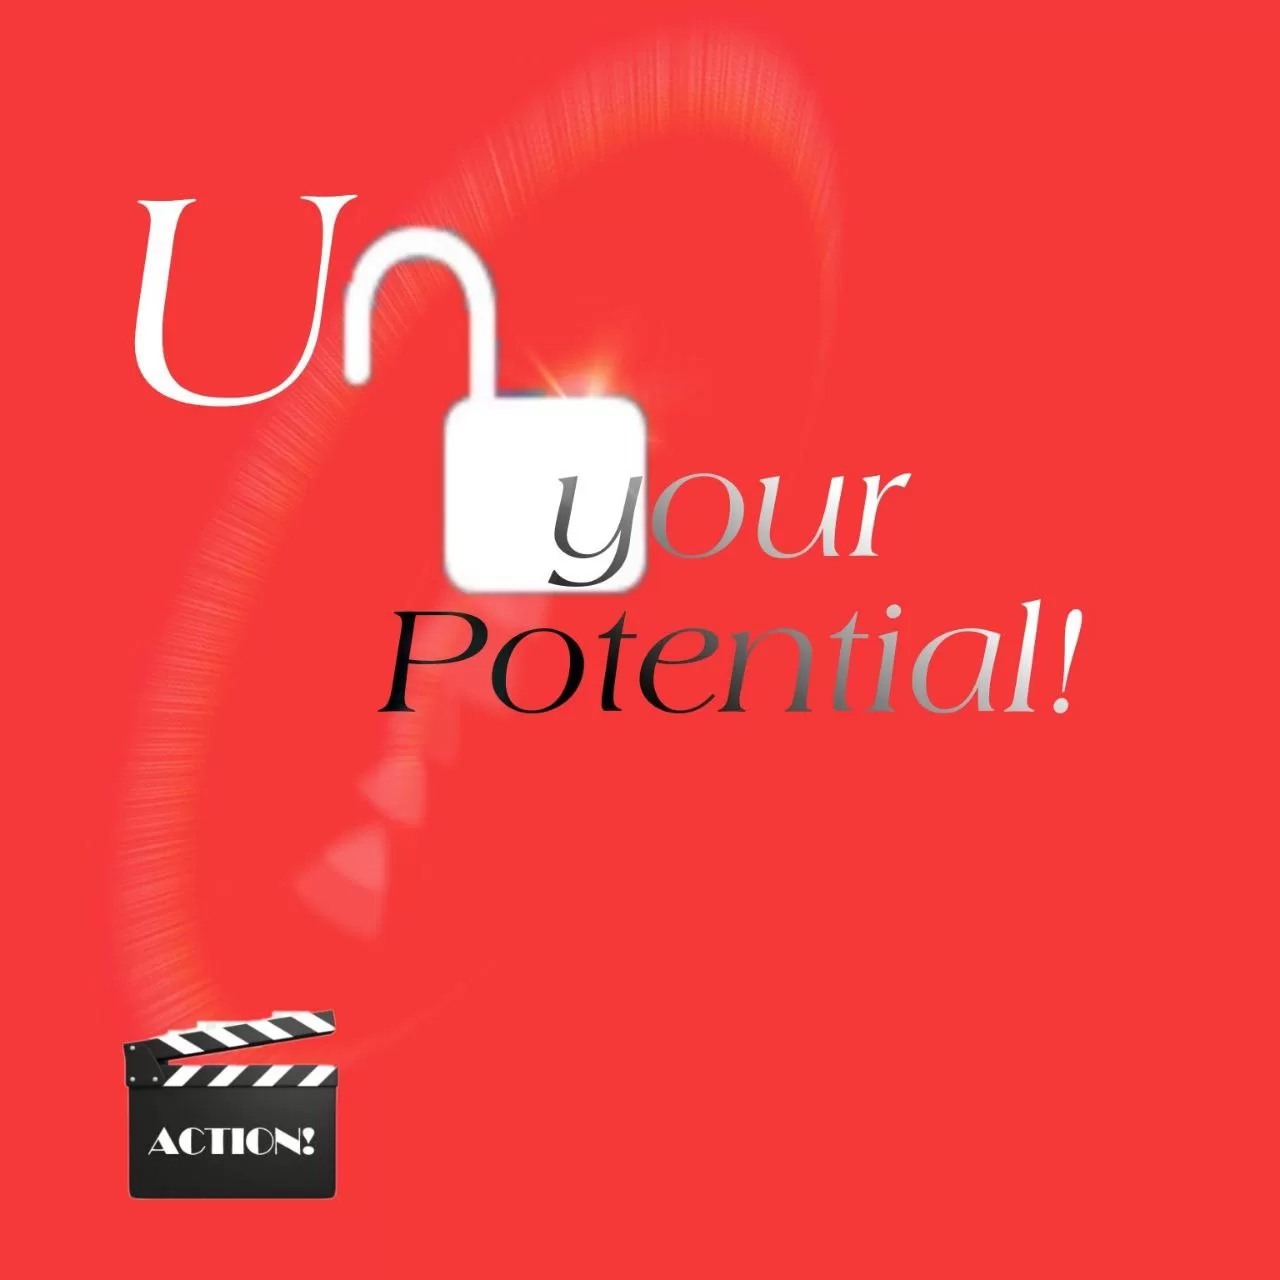 Unlock your potential